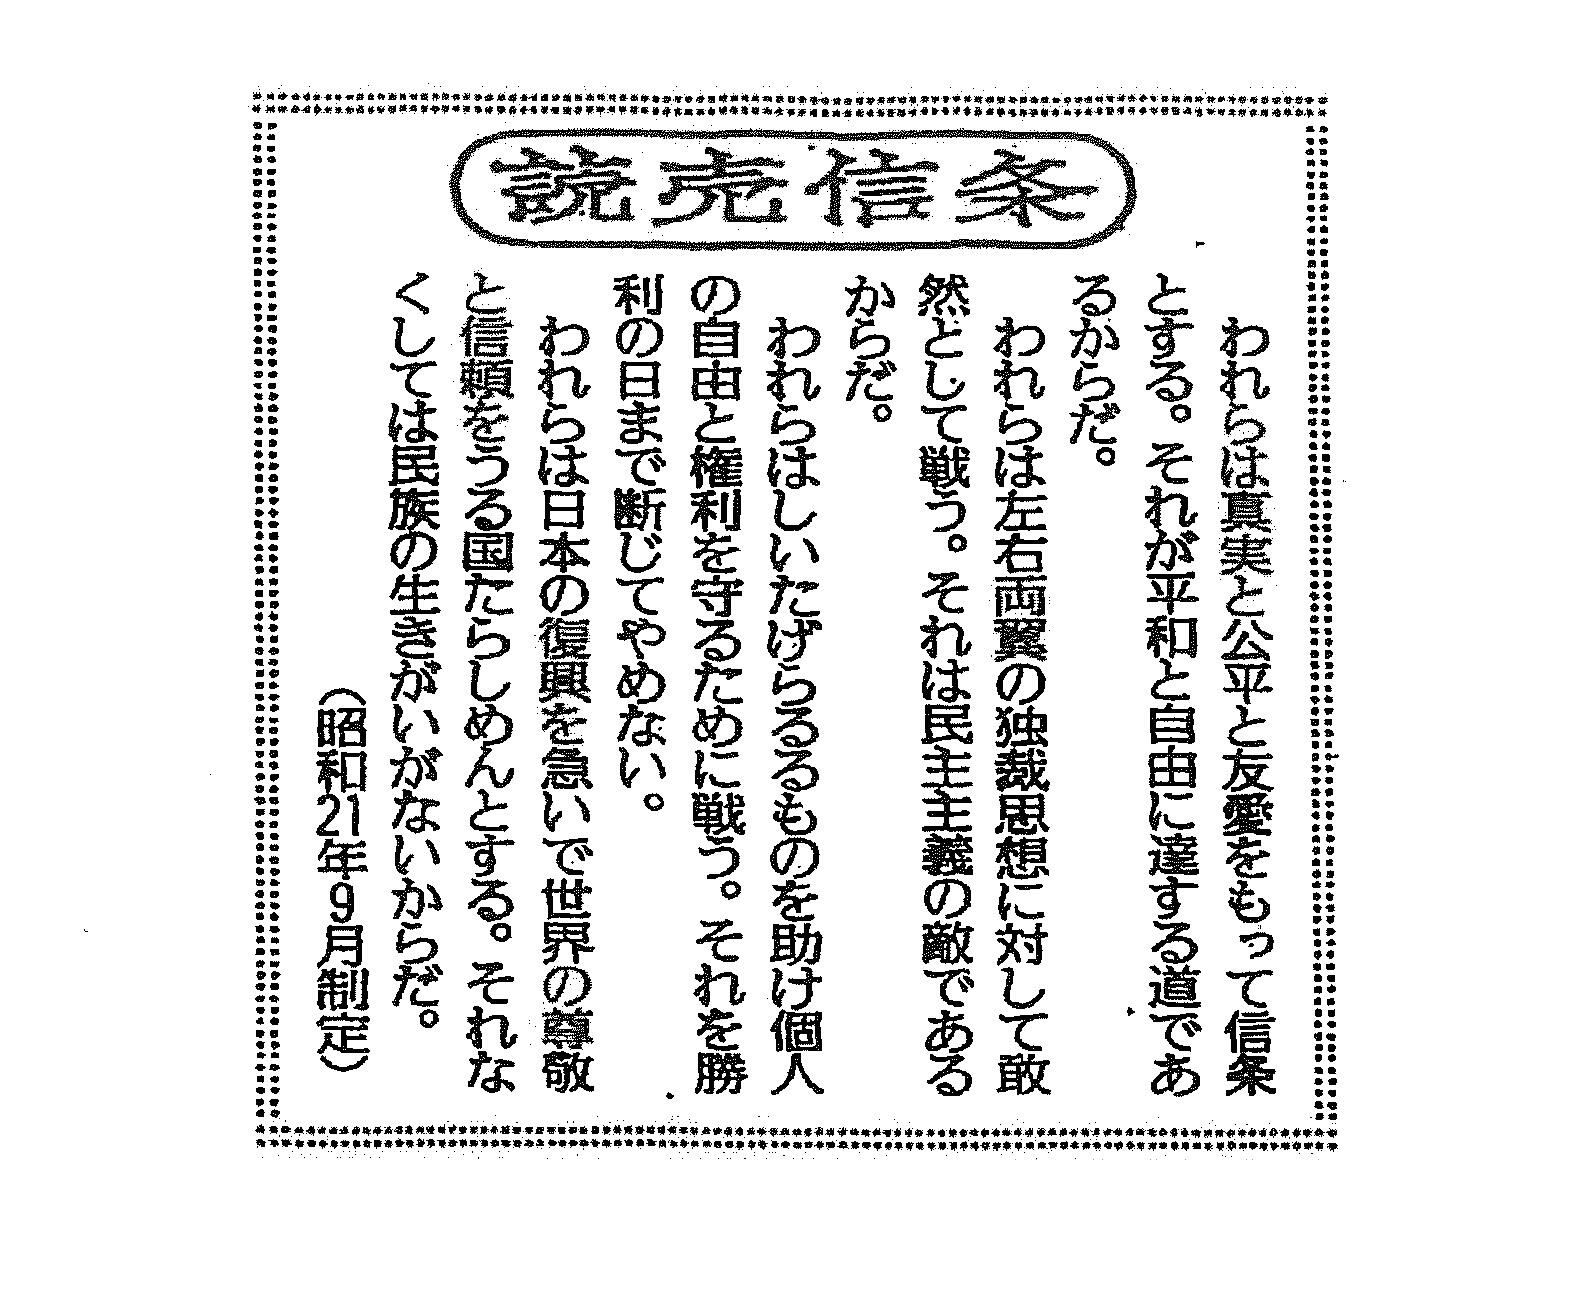 Full text of the Creed of The Yomiuri Shimbun